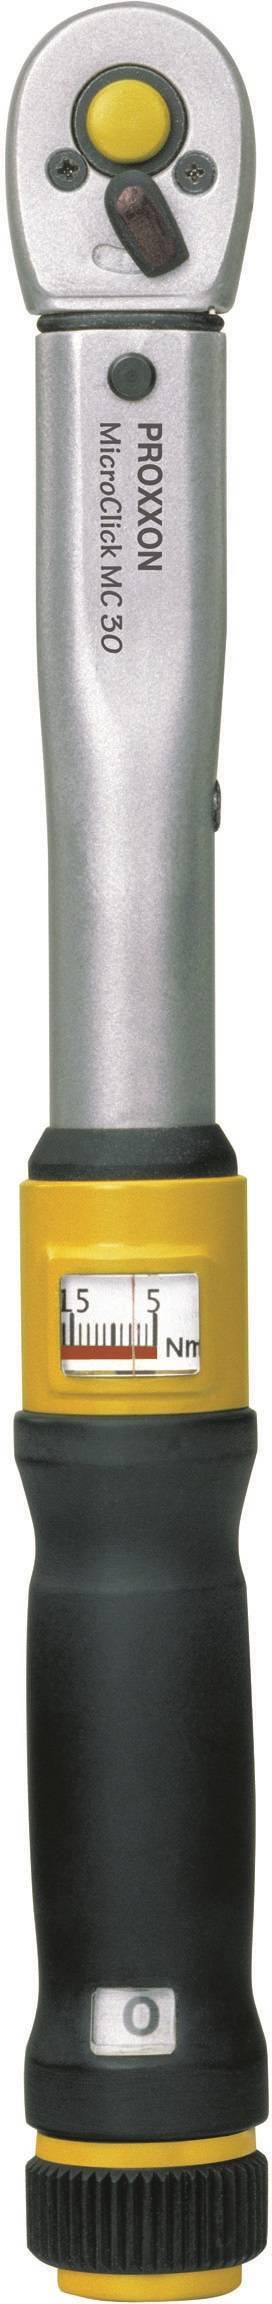 PROXXON Drehmomentschlüssel mit Umschaltknarre 1/4\" (6.3 mm) 6 - 30 Nm Proxxon Industrial MicroClick